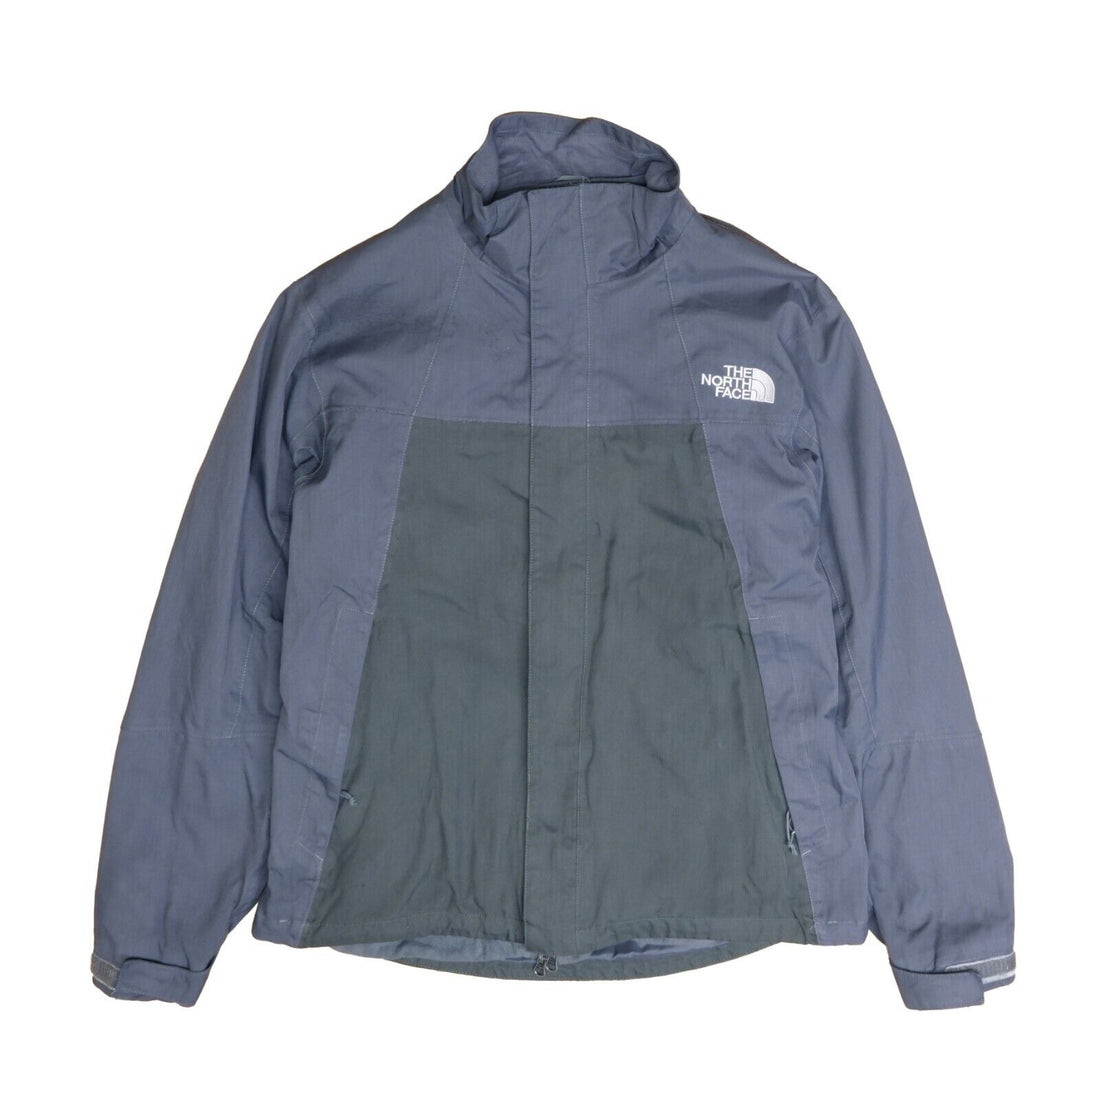 Vintage Dark Grey North Face HyVent Large Jacket Full zip Hiking walking  jacket